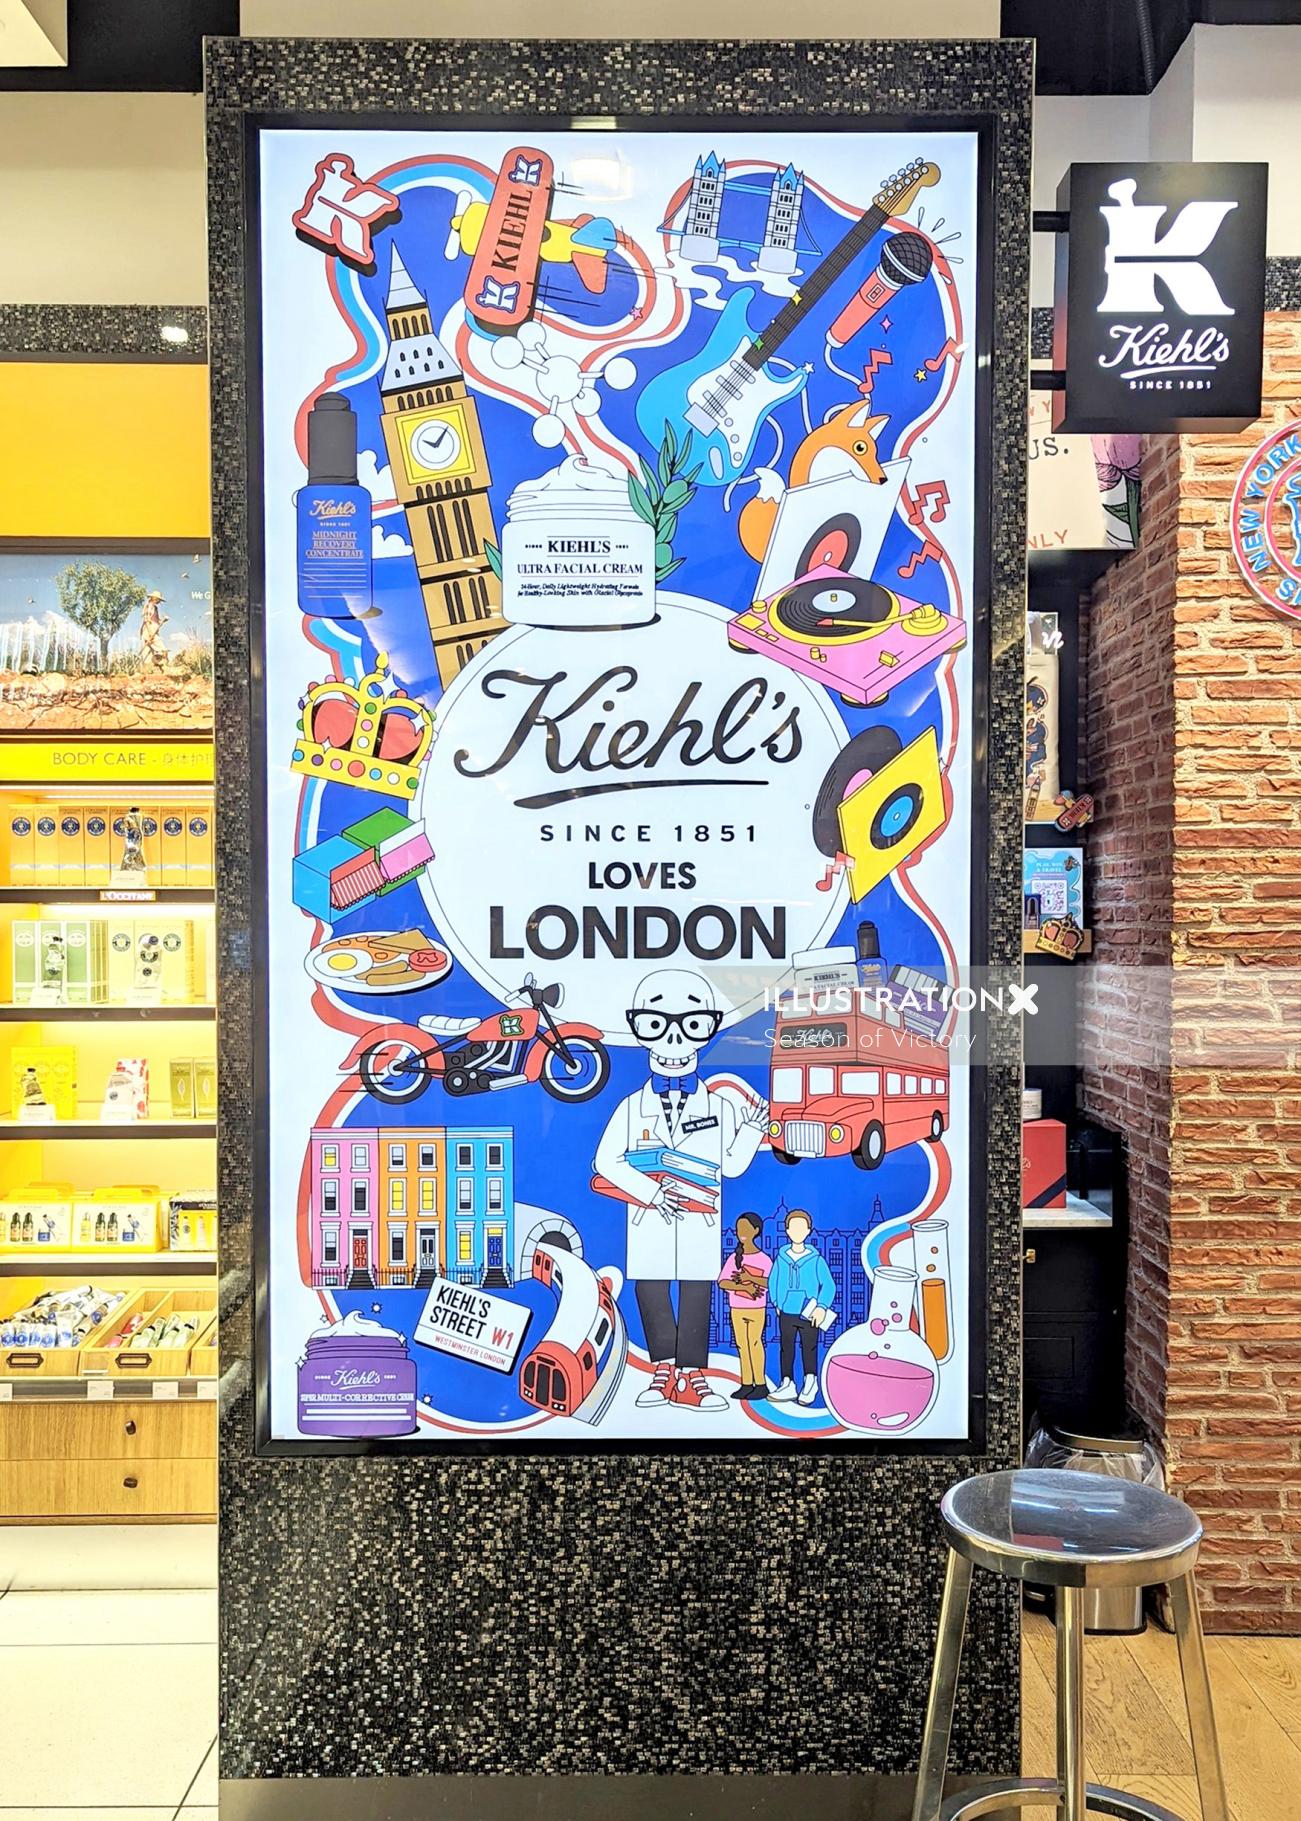 Kiehl's London advertising poster illustration